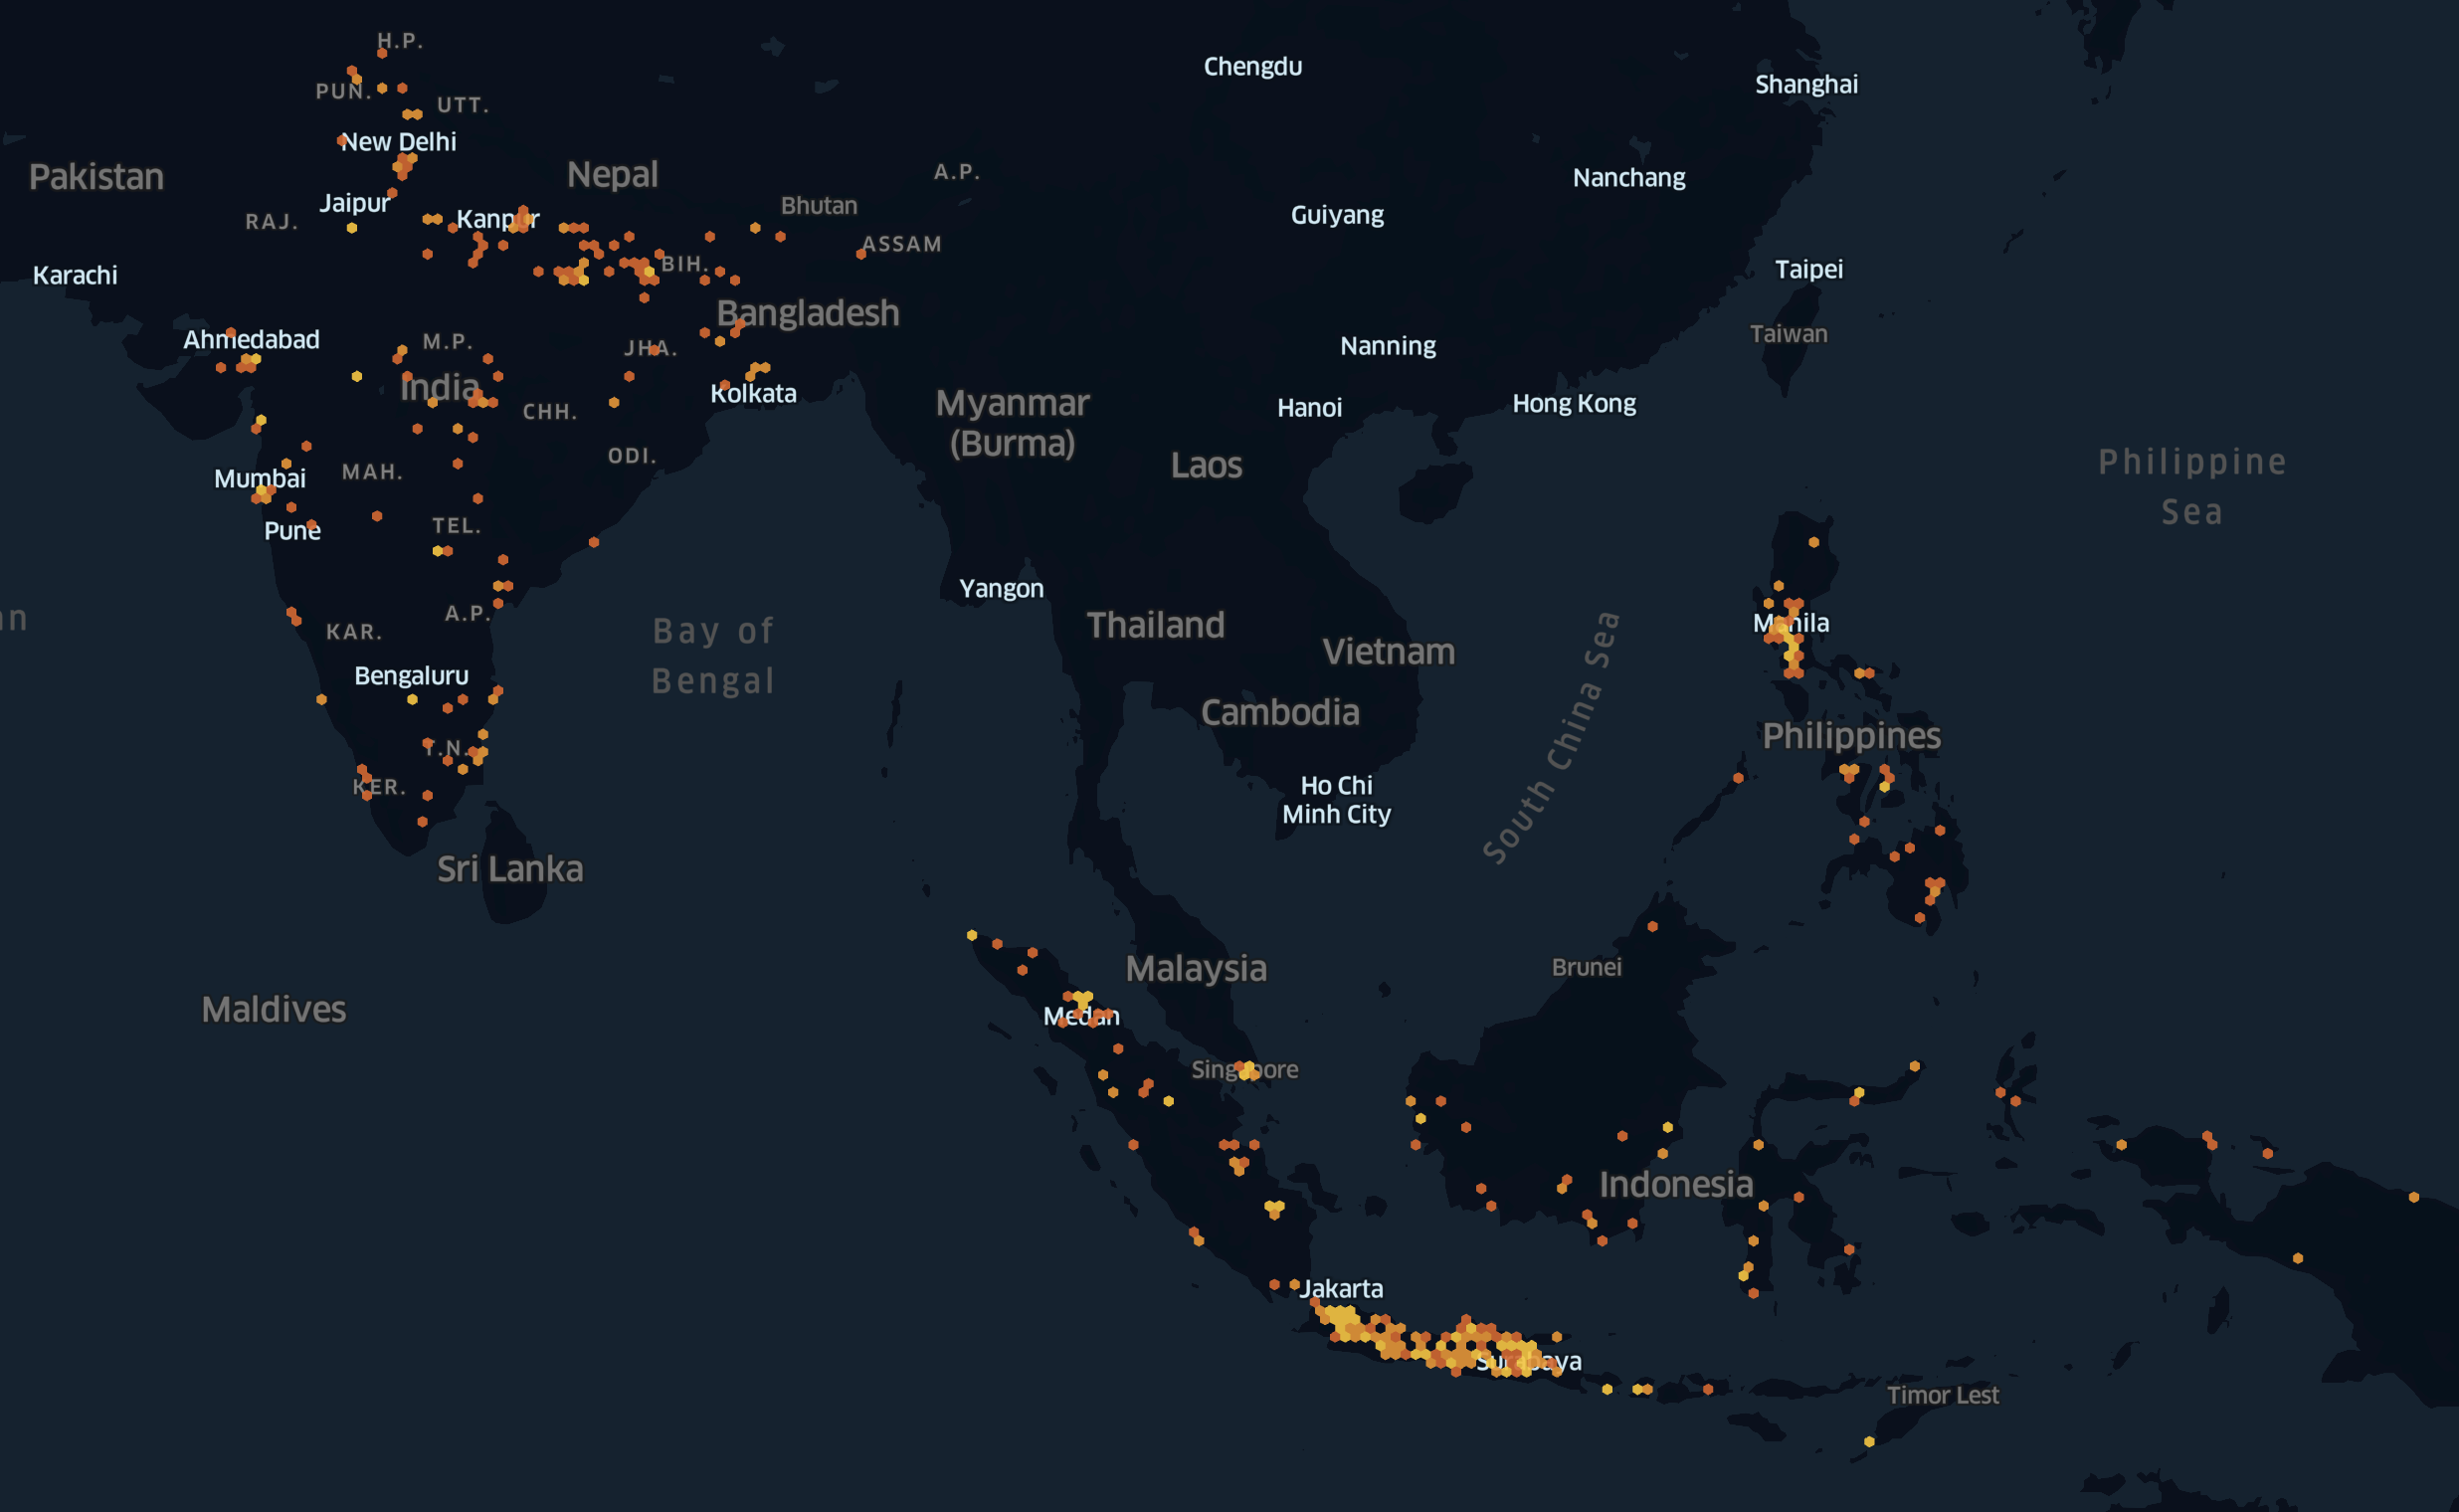 Geolancers heat map for 2 million milestone blog